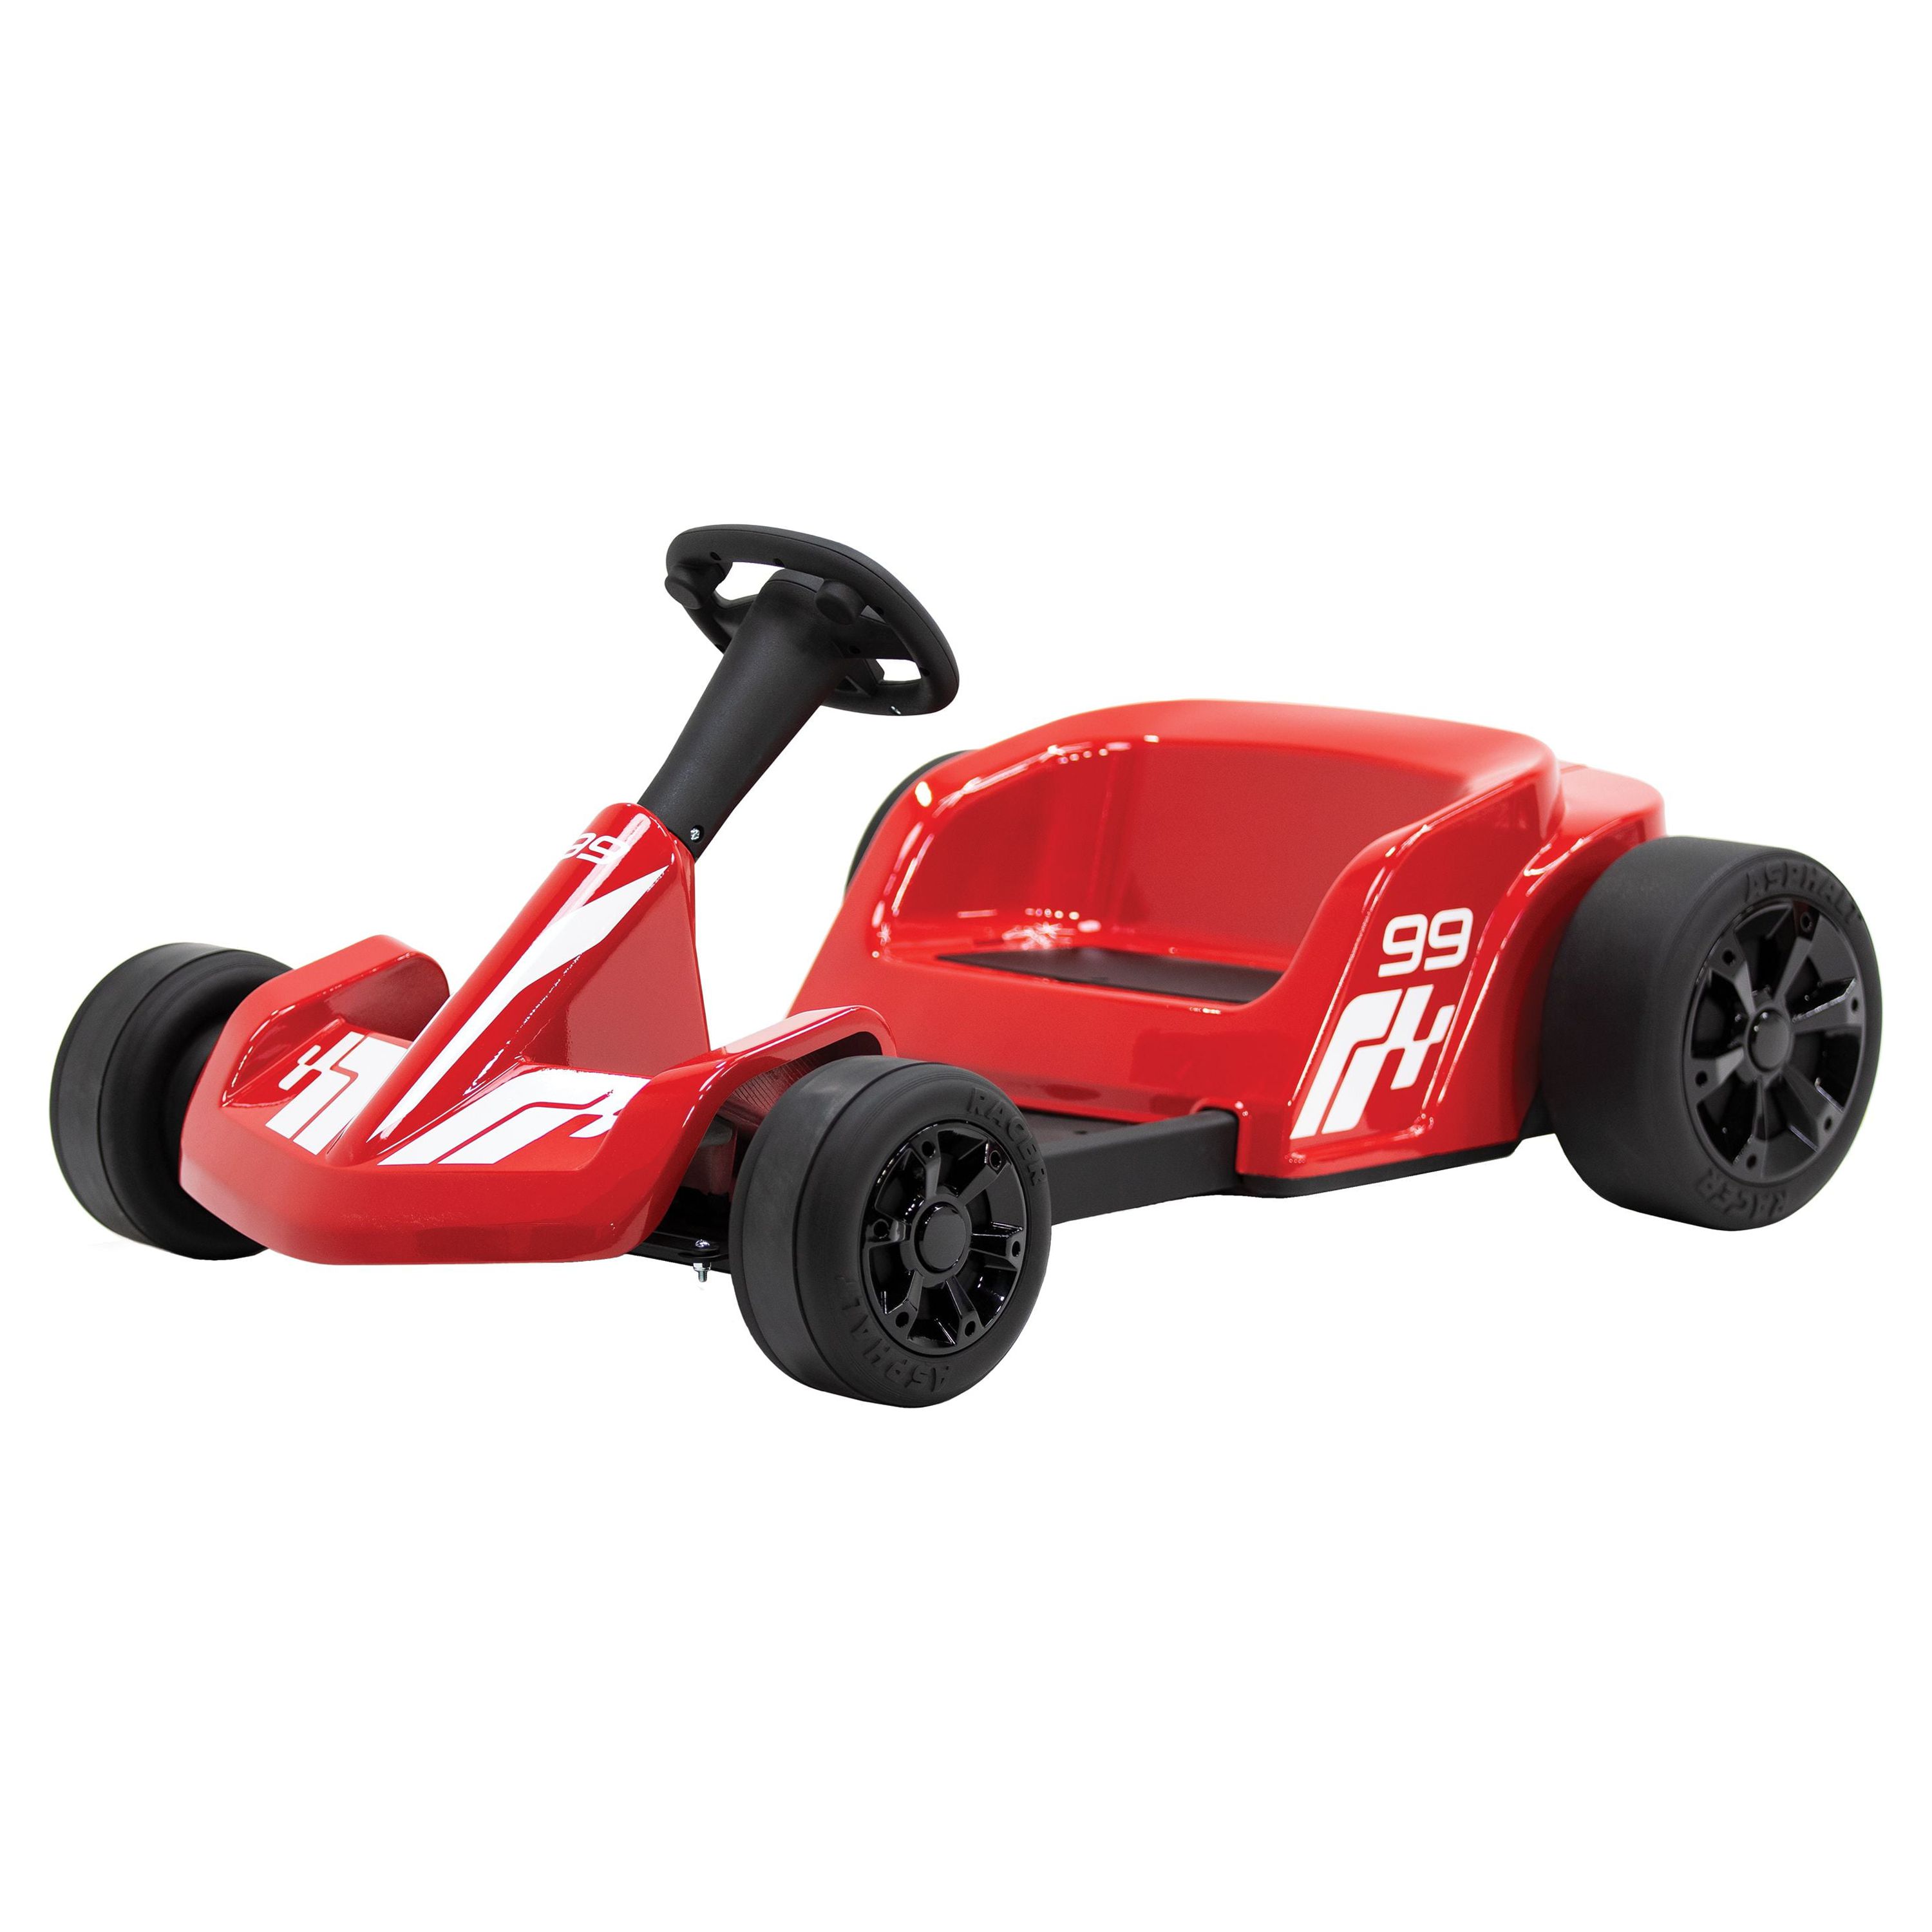 Kalee Red Asphalt Racer 12V Go Kart Powered Ride-on for Boys and Girls - image 3 of 7